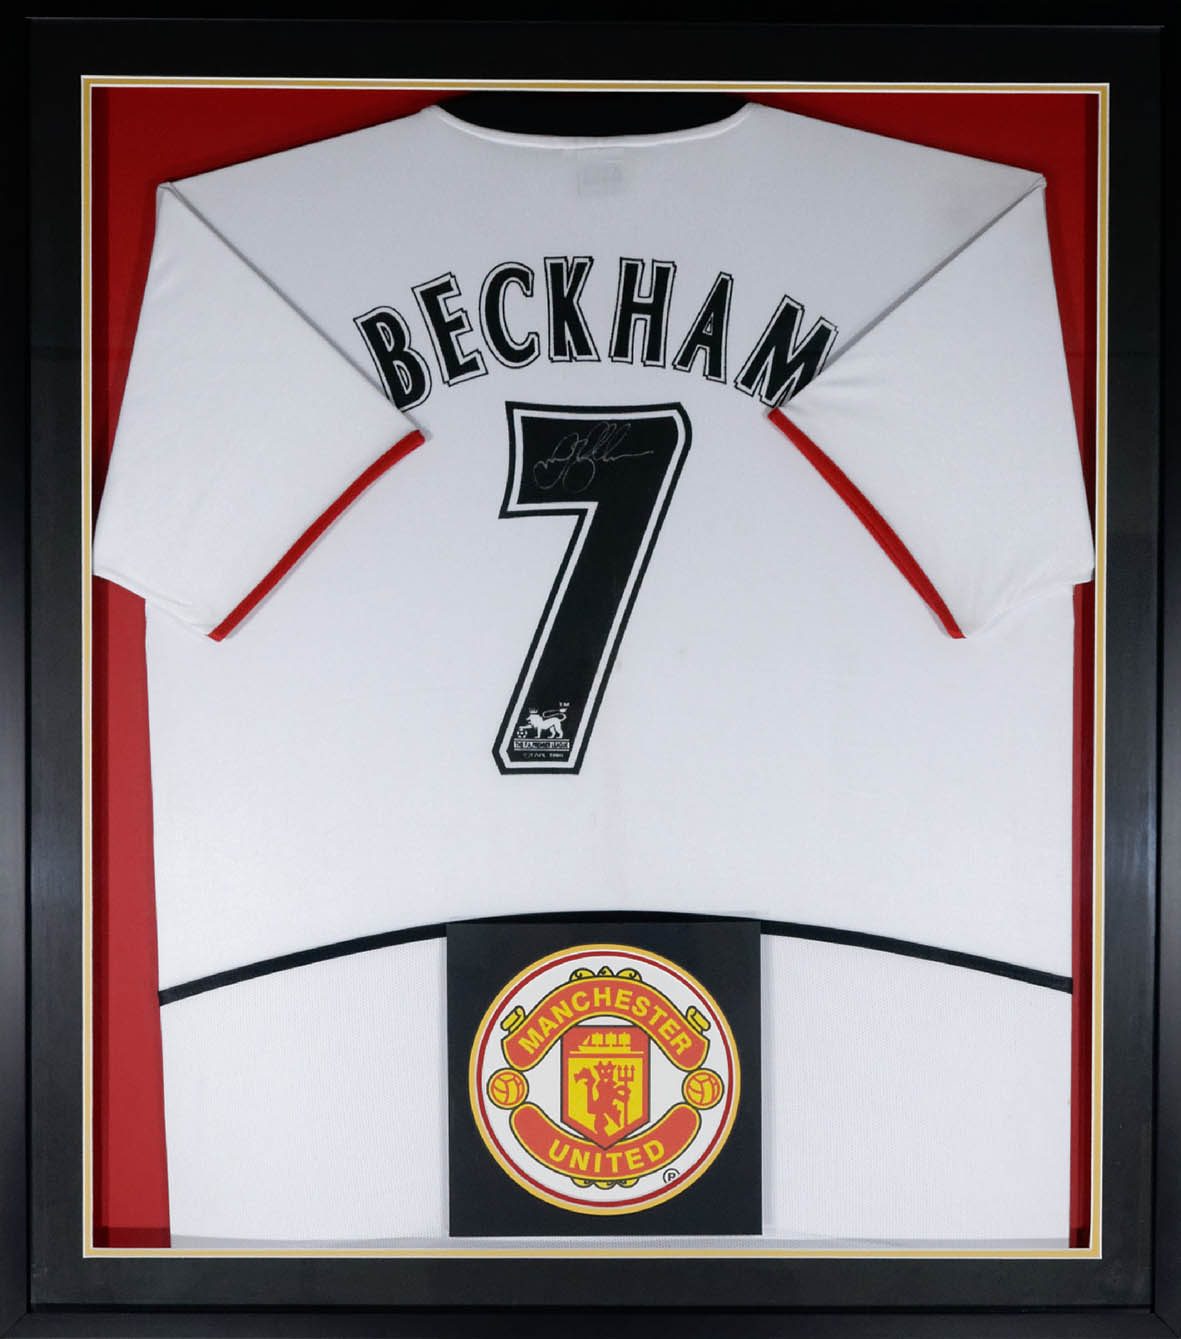 david beckham signed manchester united jersey